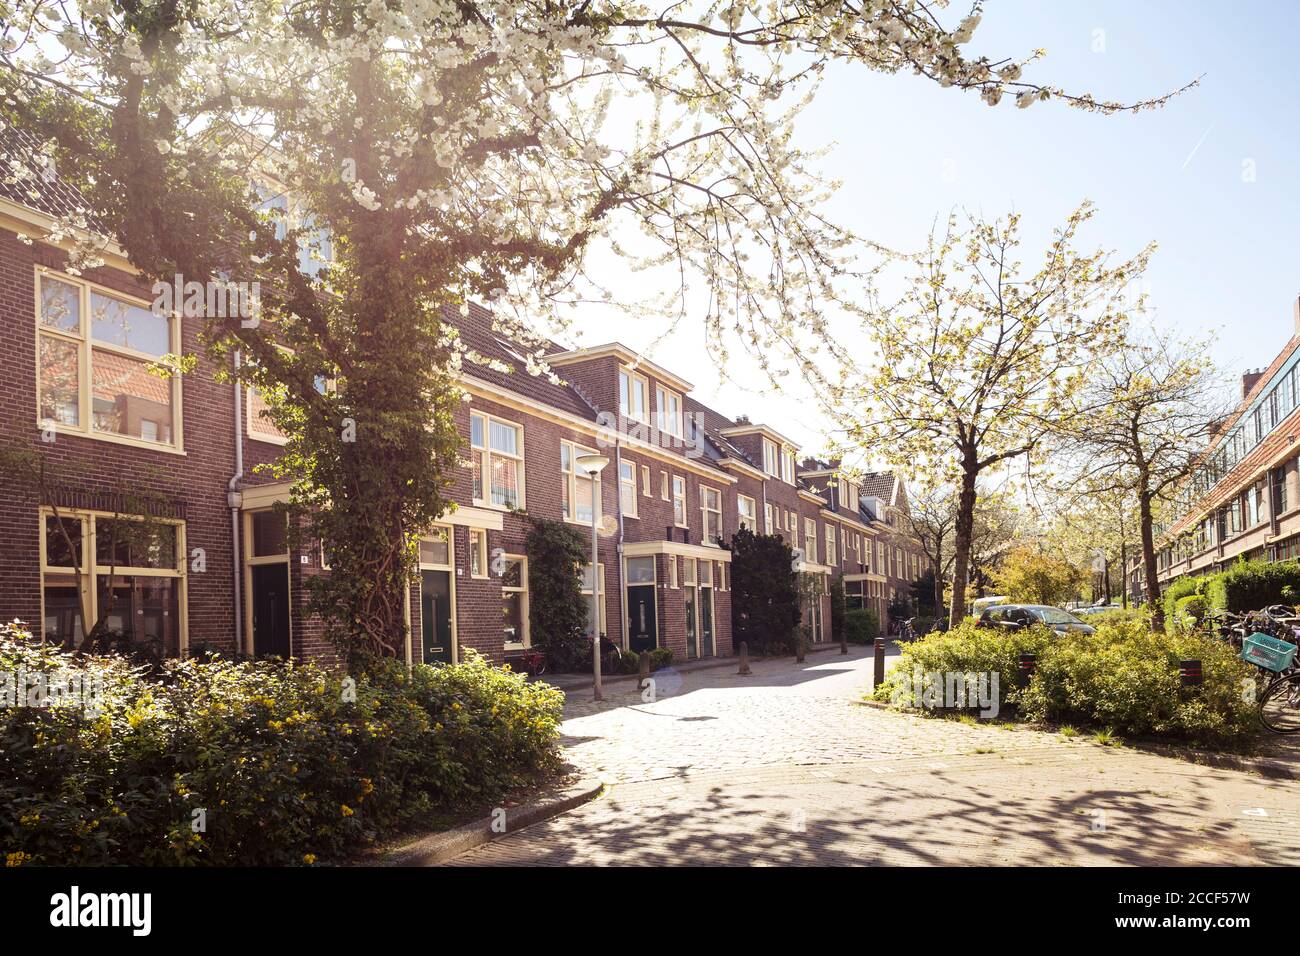 Case residenziali a Groningen, Paesi Bassi Foto Stock